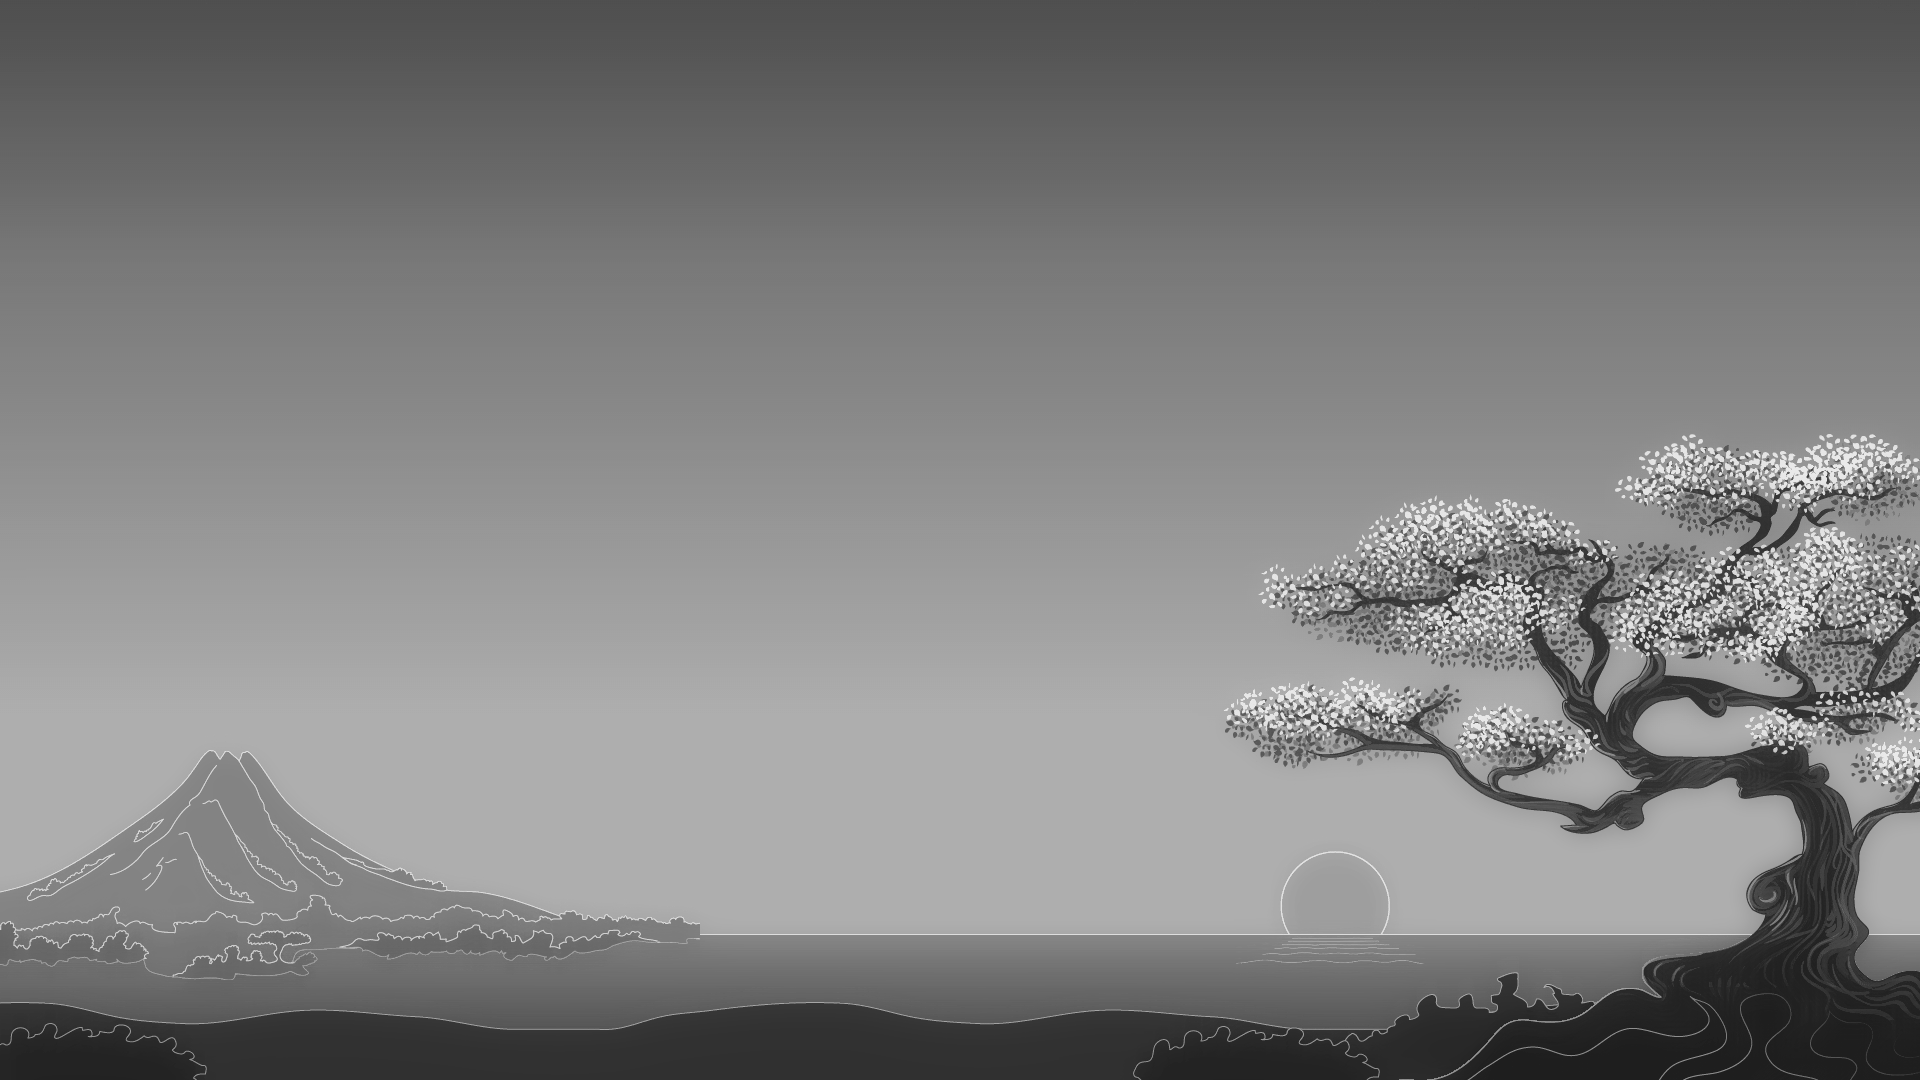 General 1920x1080 digital art minimalism simple background trees nature landscape horizon Sun monochrome Japanese Mount Fuji mountains